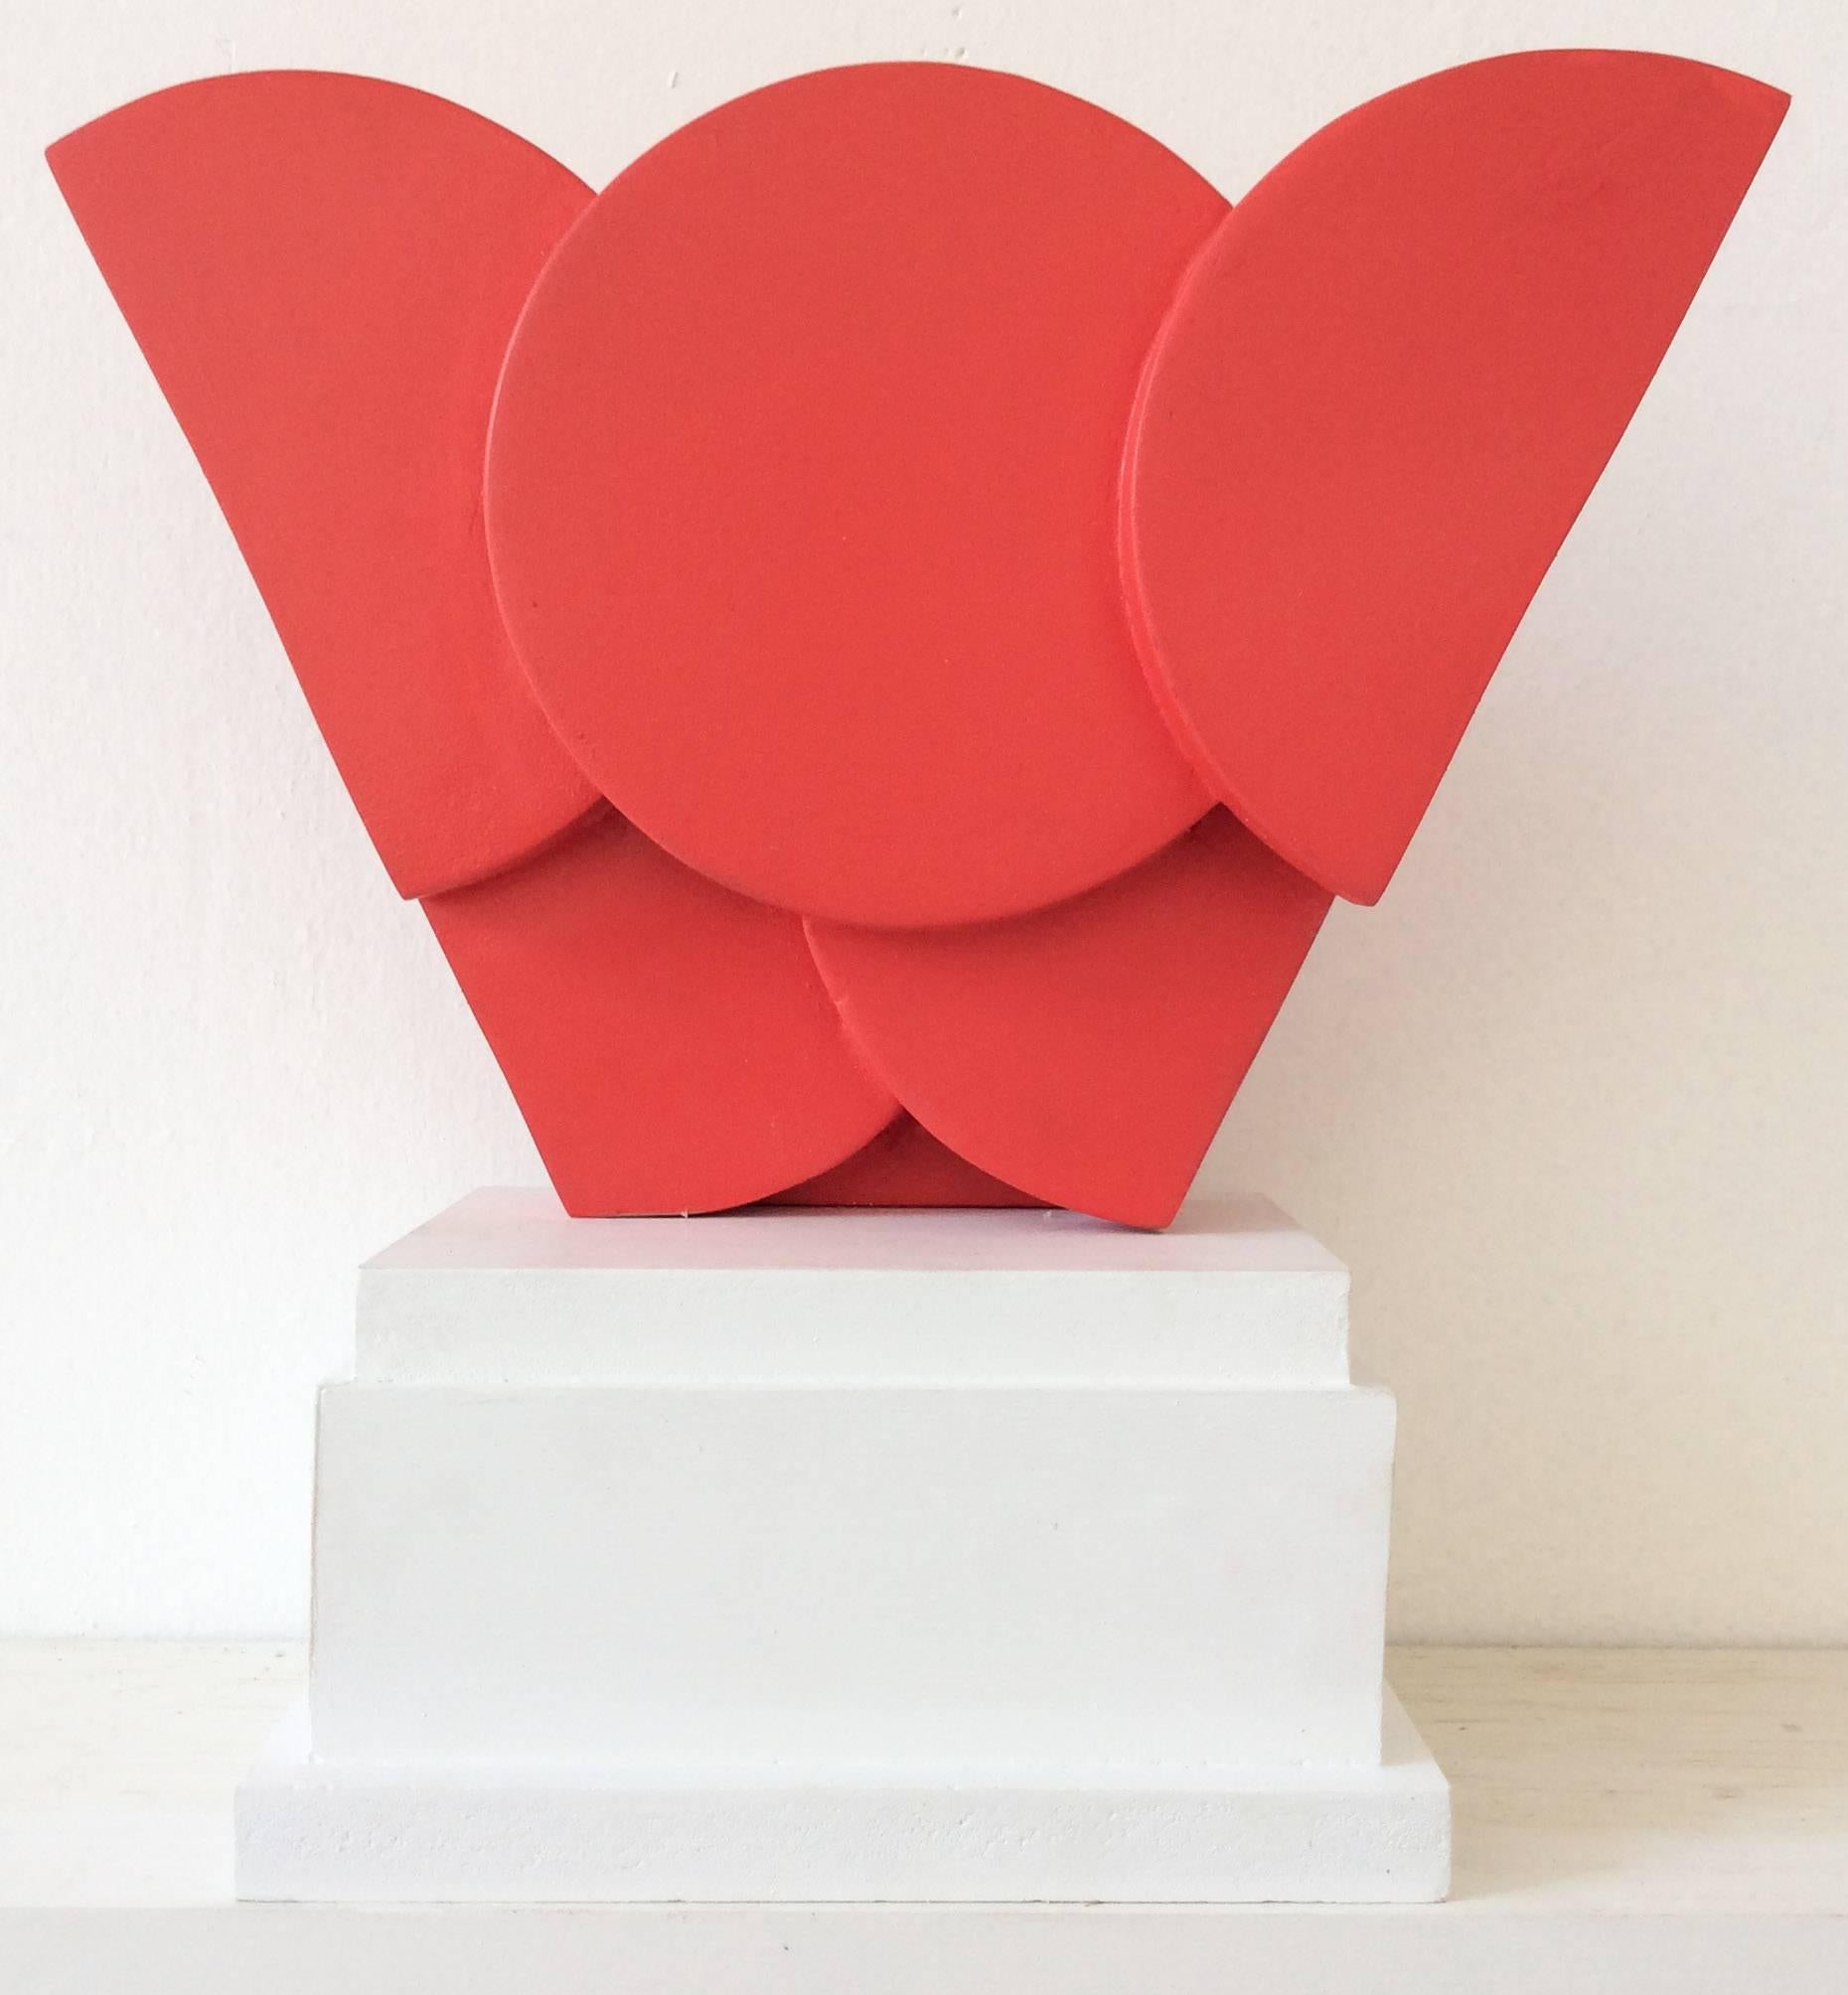 Mariette (Abstract Minimalist Mid Century Modern Sculpture in Bright Red)